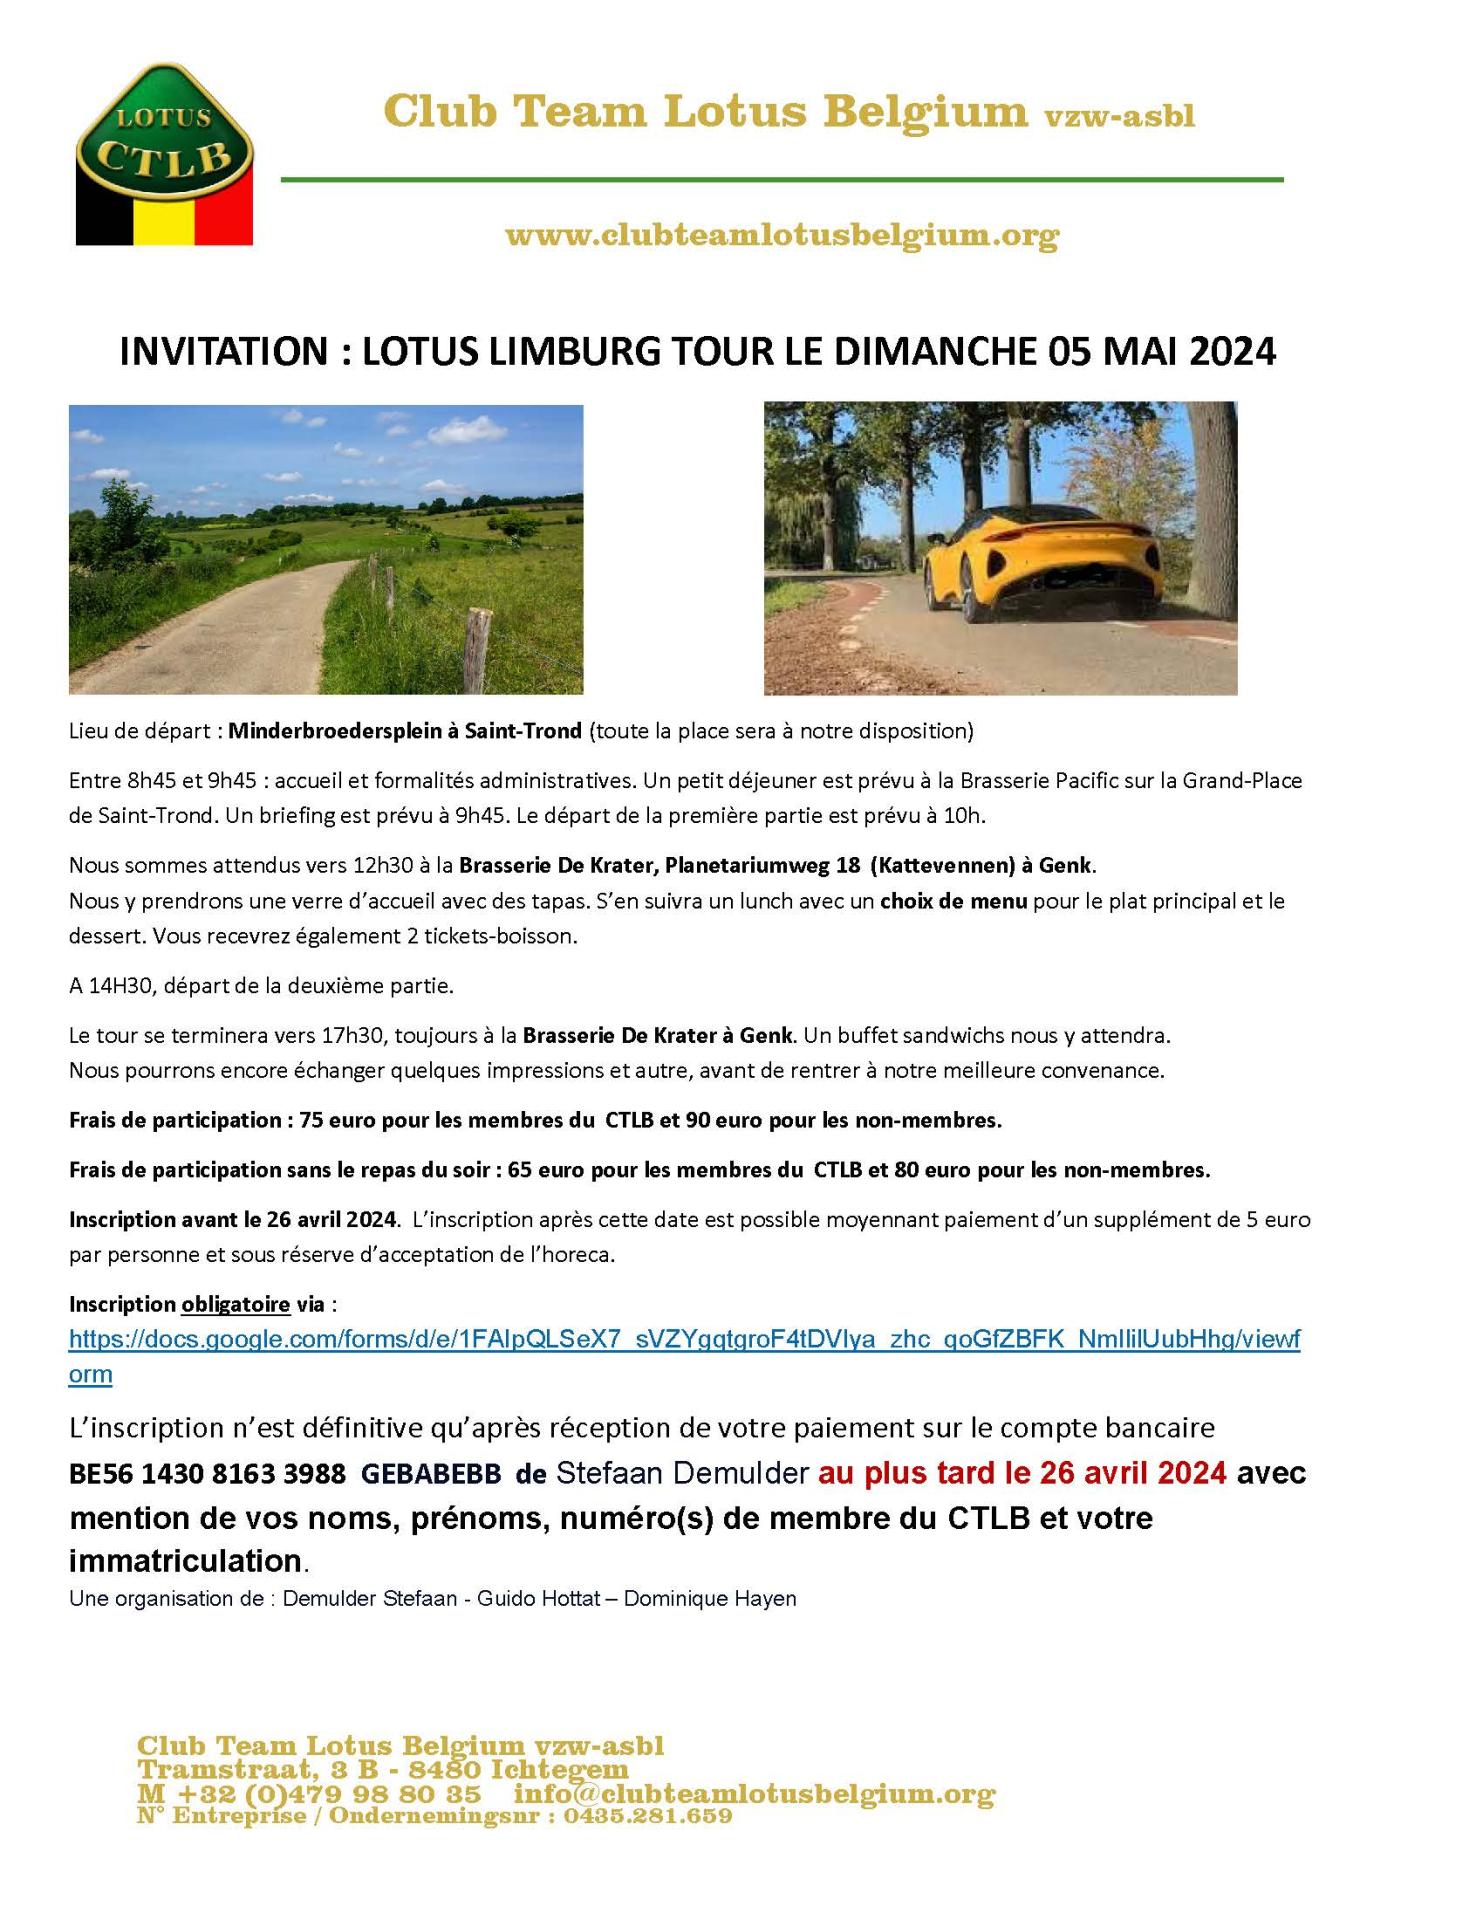 Invitation lotus limburg tour 2024